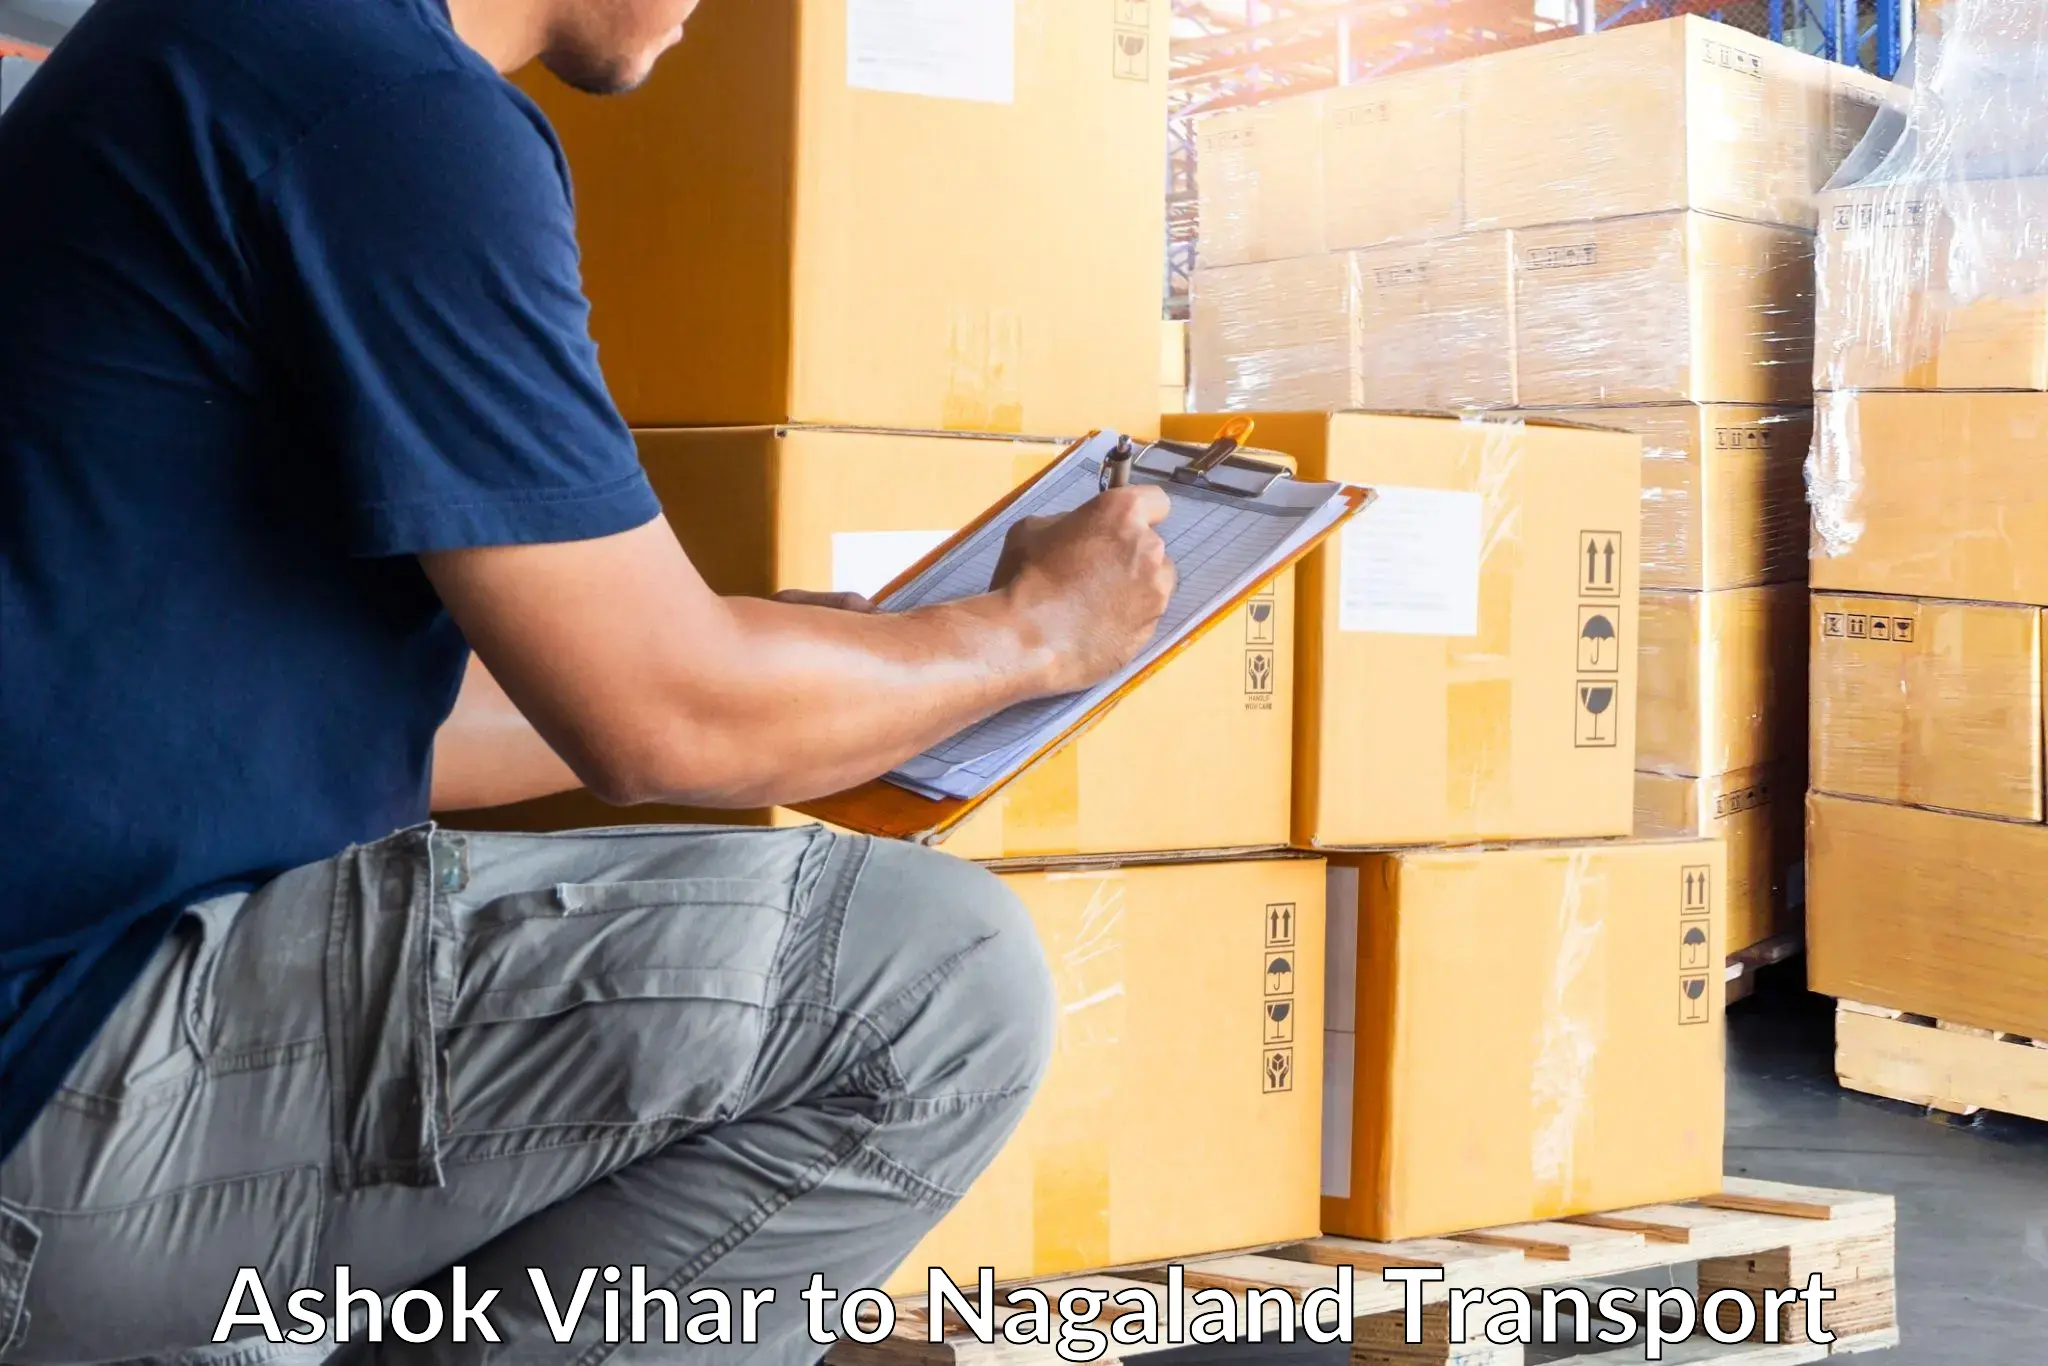 Shipping partner Ashok Vihar to Nagaland